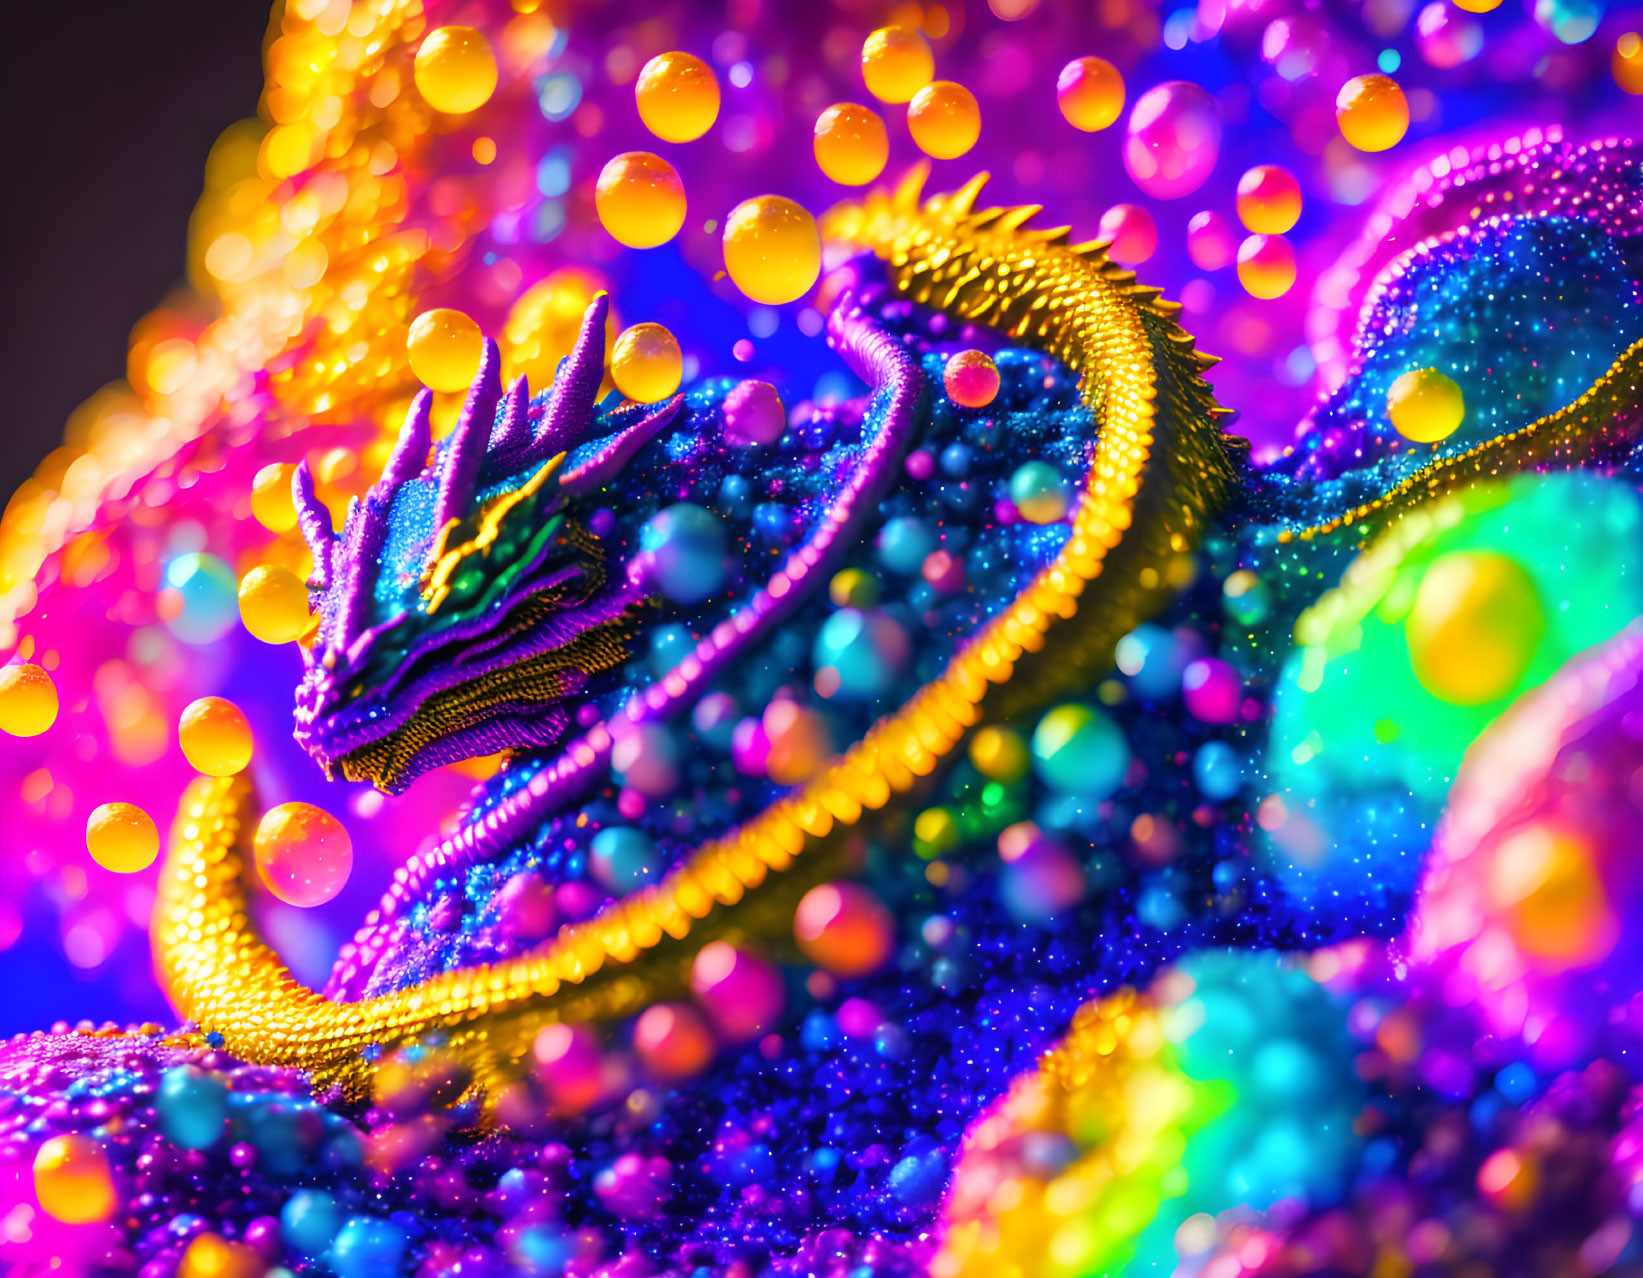 Colorful Decorative Dragon Art Against Multicolored Orbs